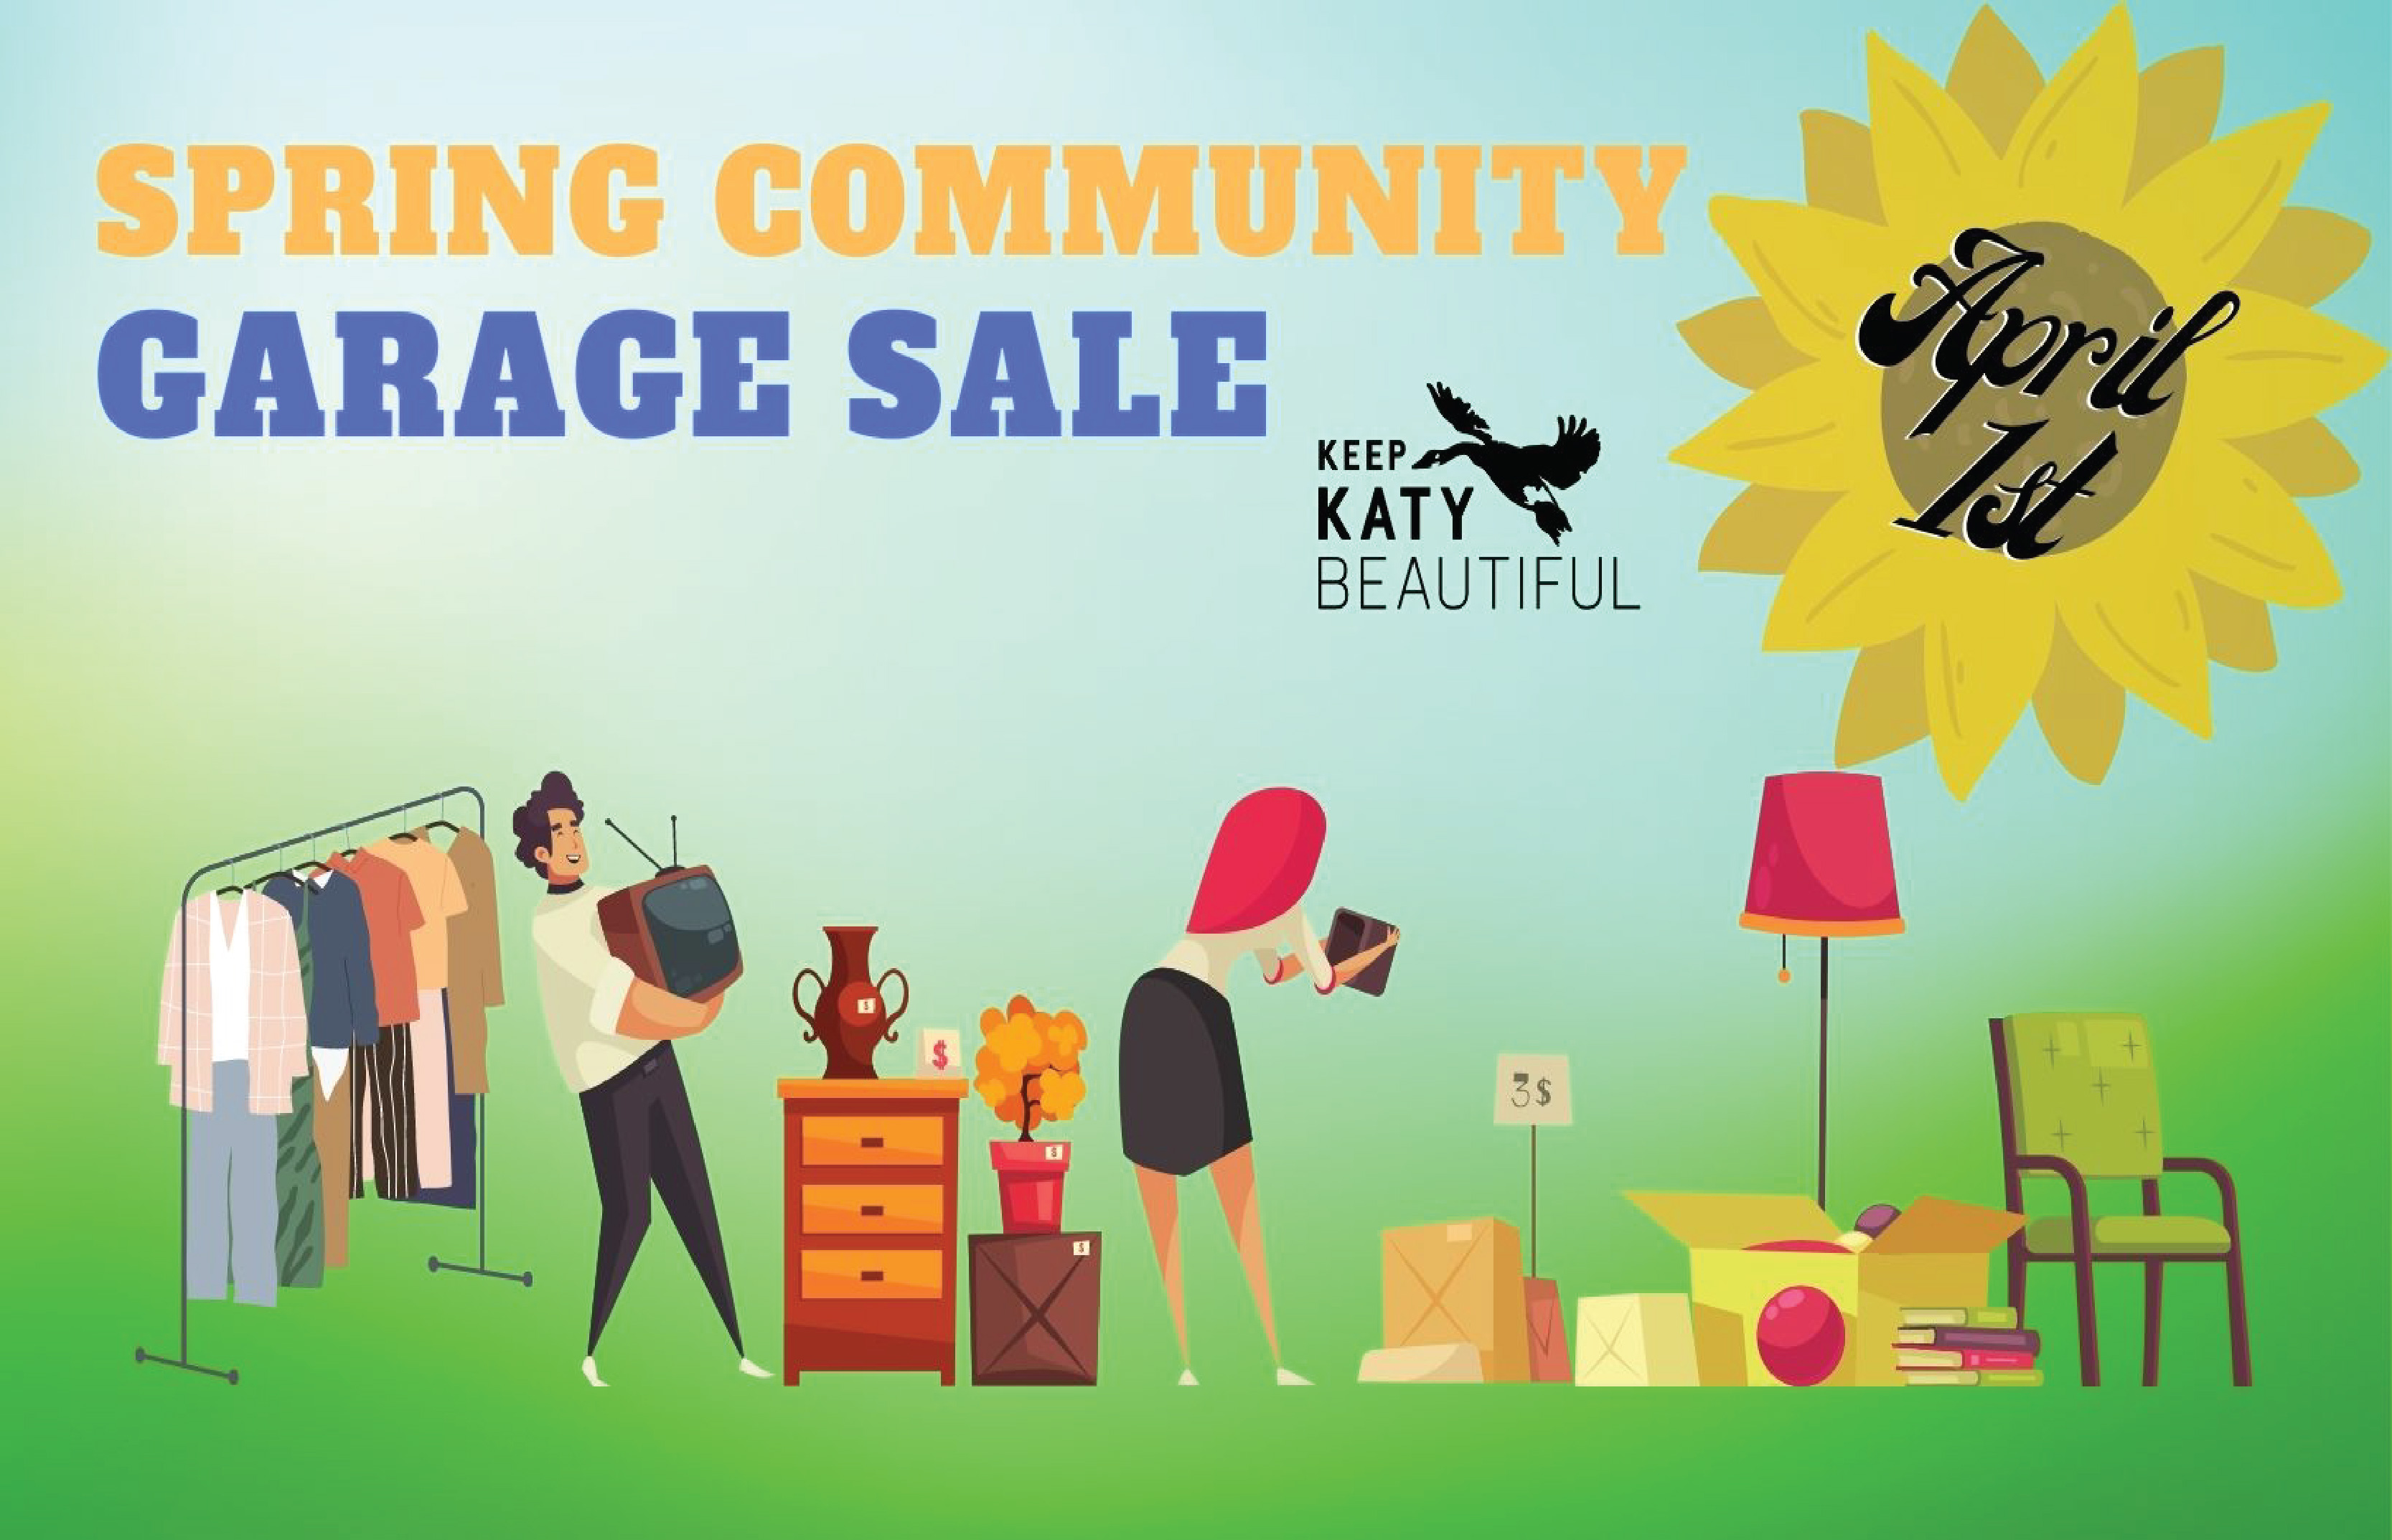 City of Katy Spring Community Garage Sale Registration Deadline Approaching